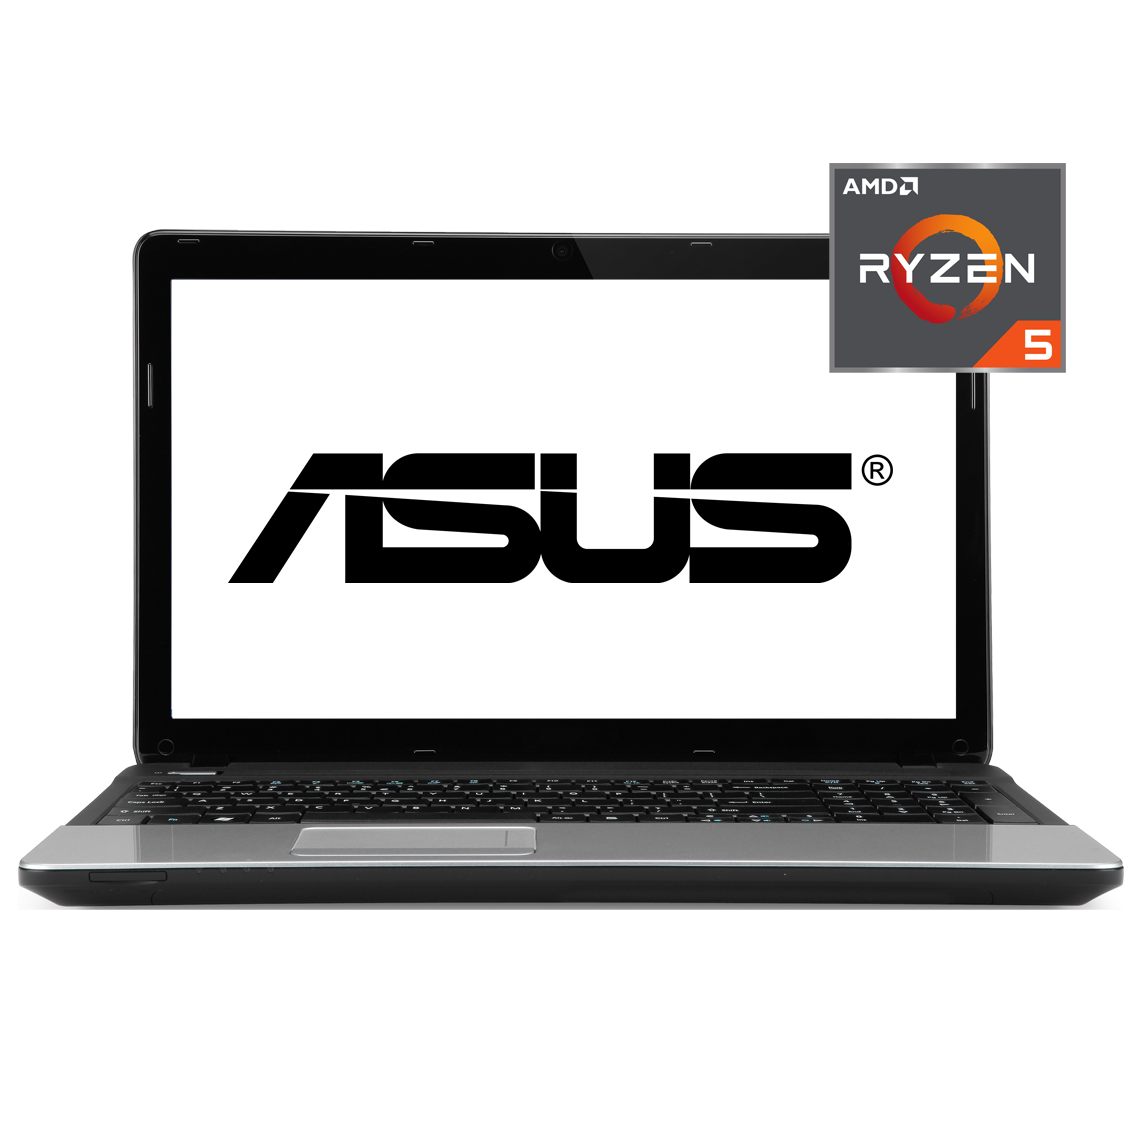 ASUS - 13 inch AMD Ryzen 5